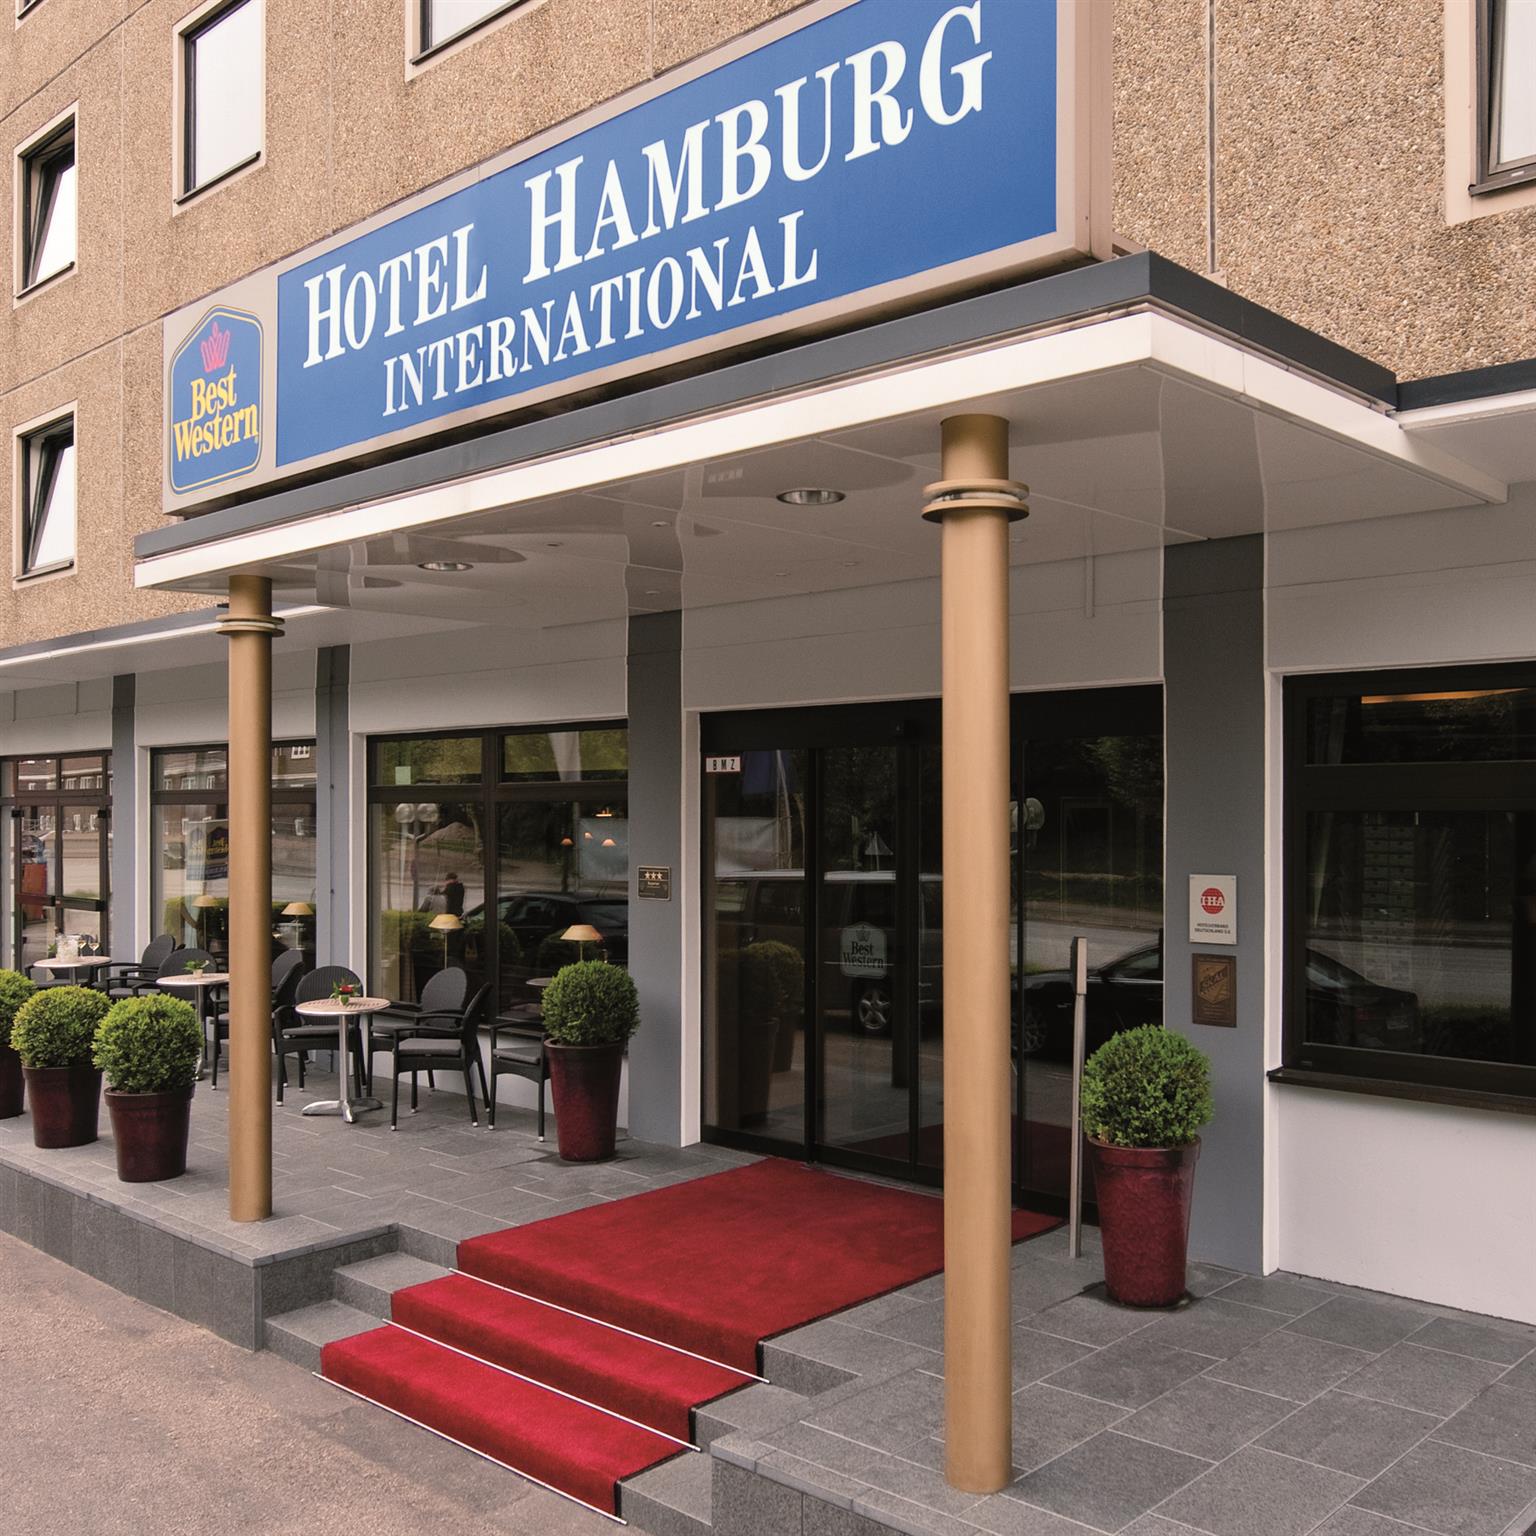 BEST WESTERN HOTEL HAMBURG INTERNATIONAL